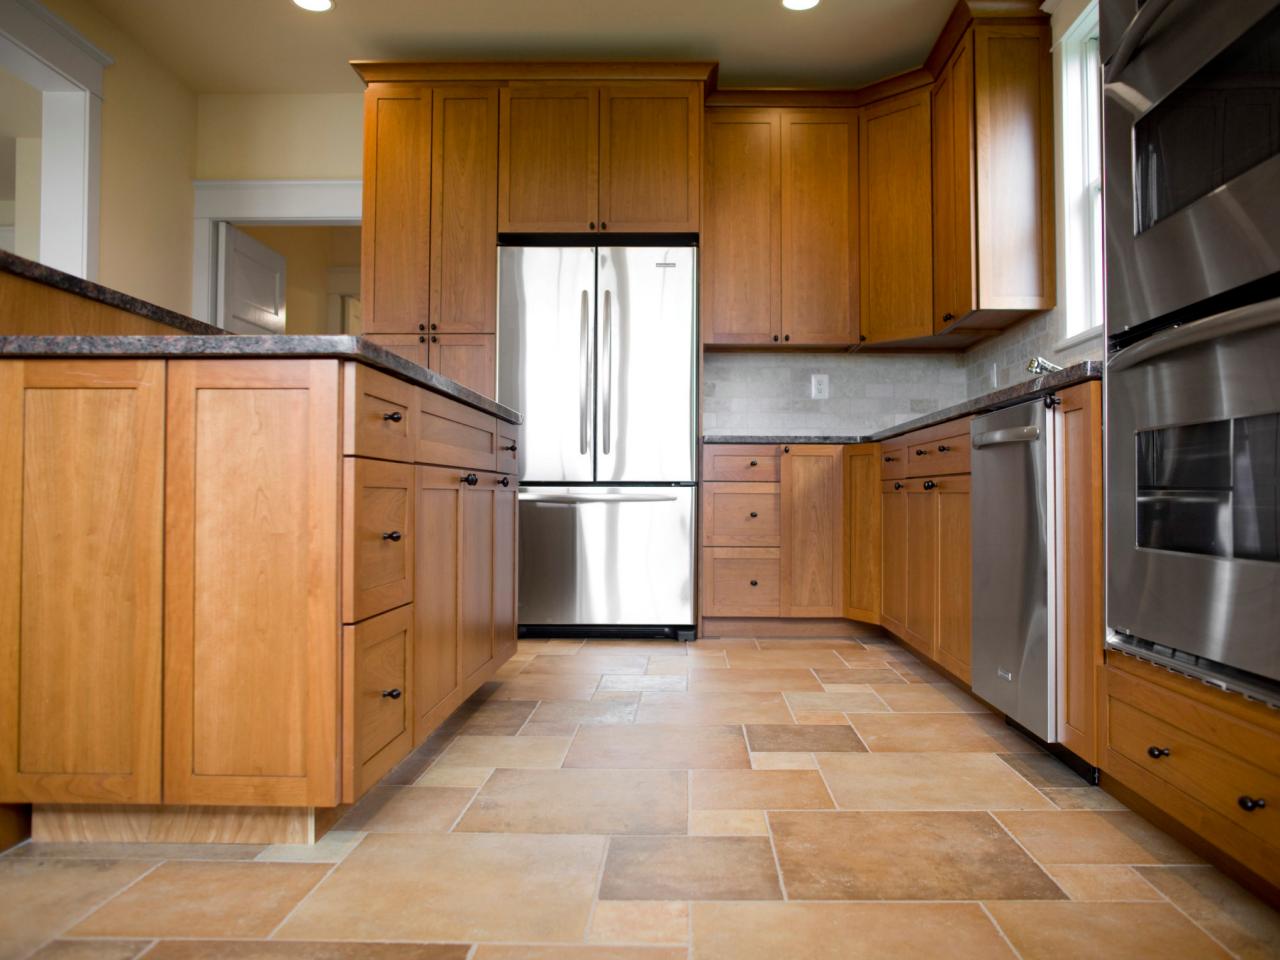 Tile kitchen flooring // sndimg.com